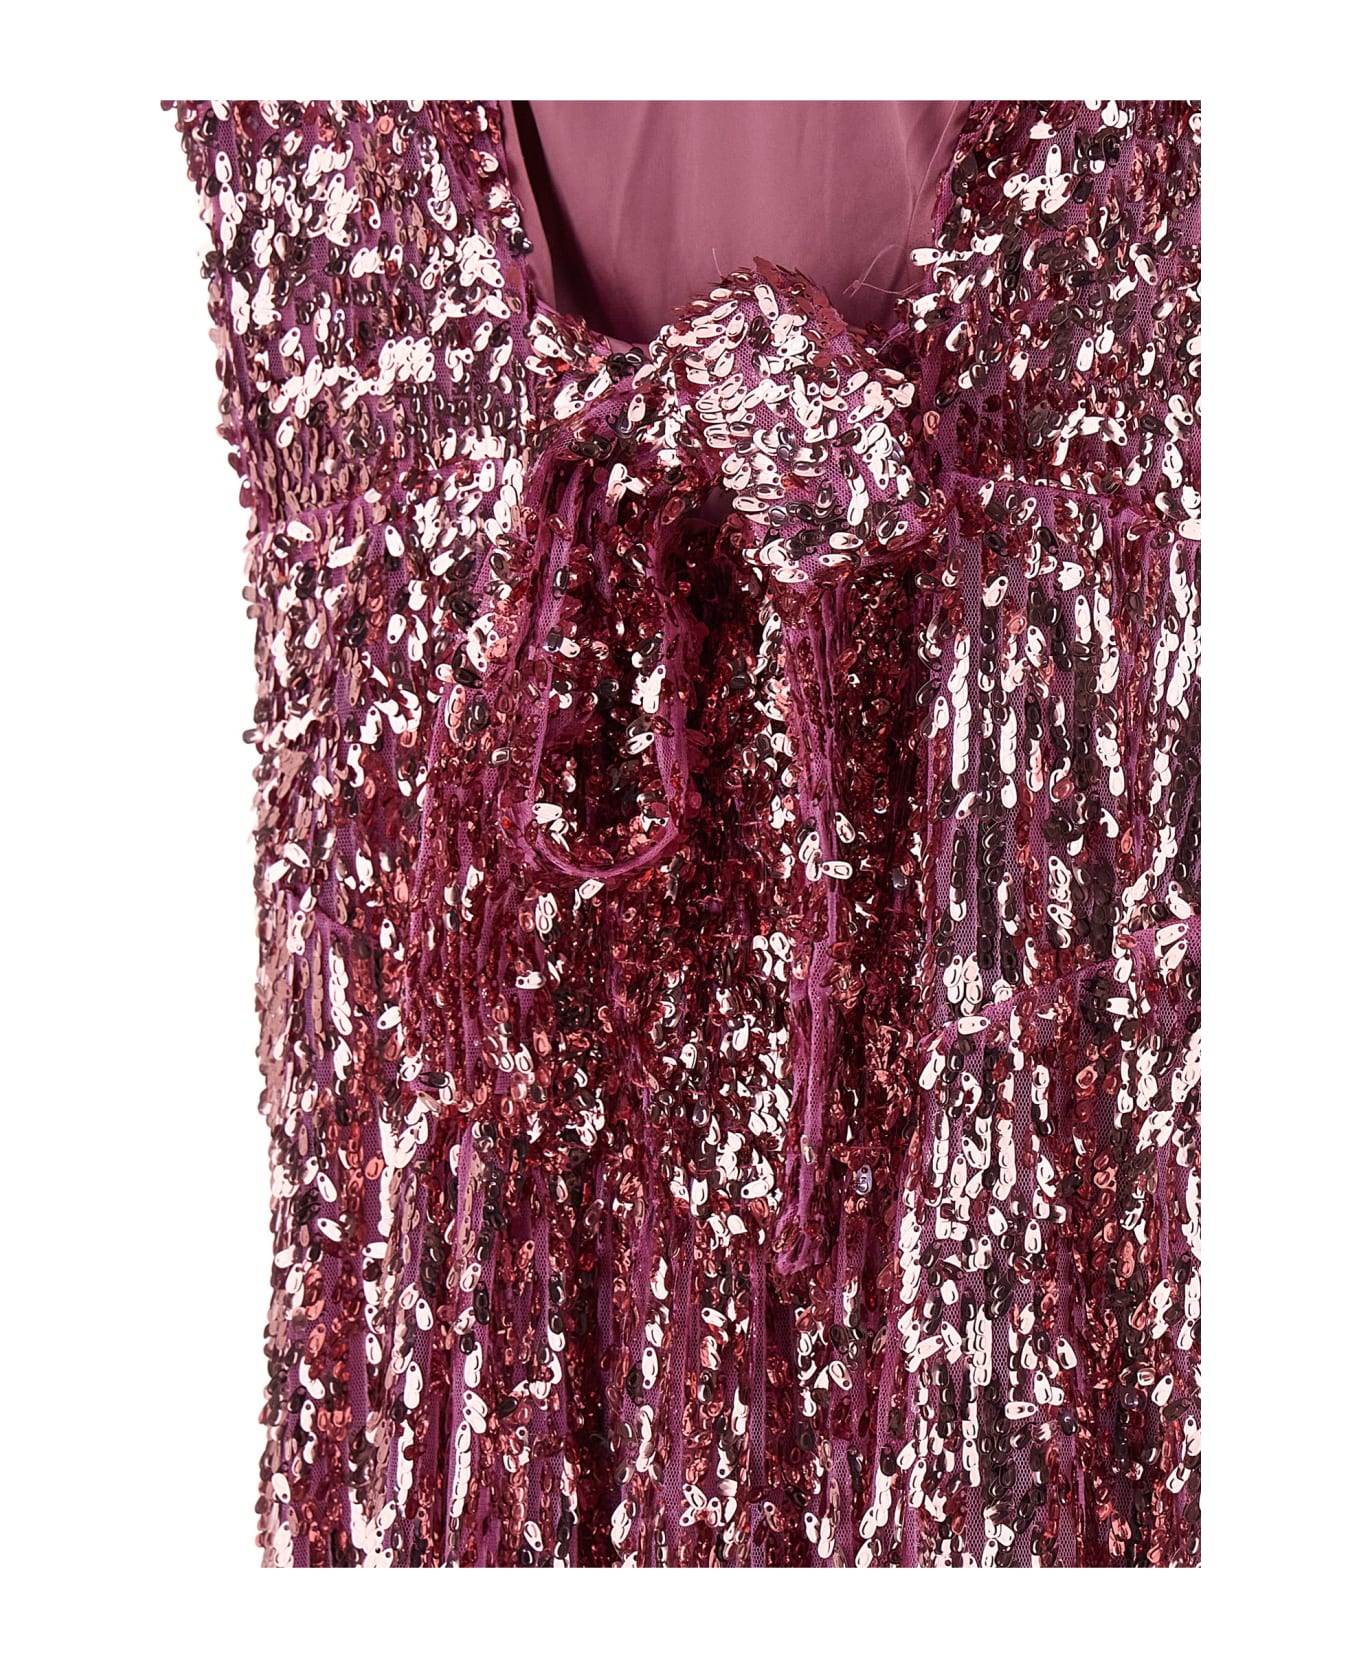 Rotate by Birger Christensen Sequin Midi Dress - Pink